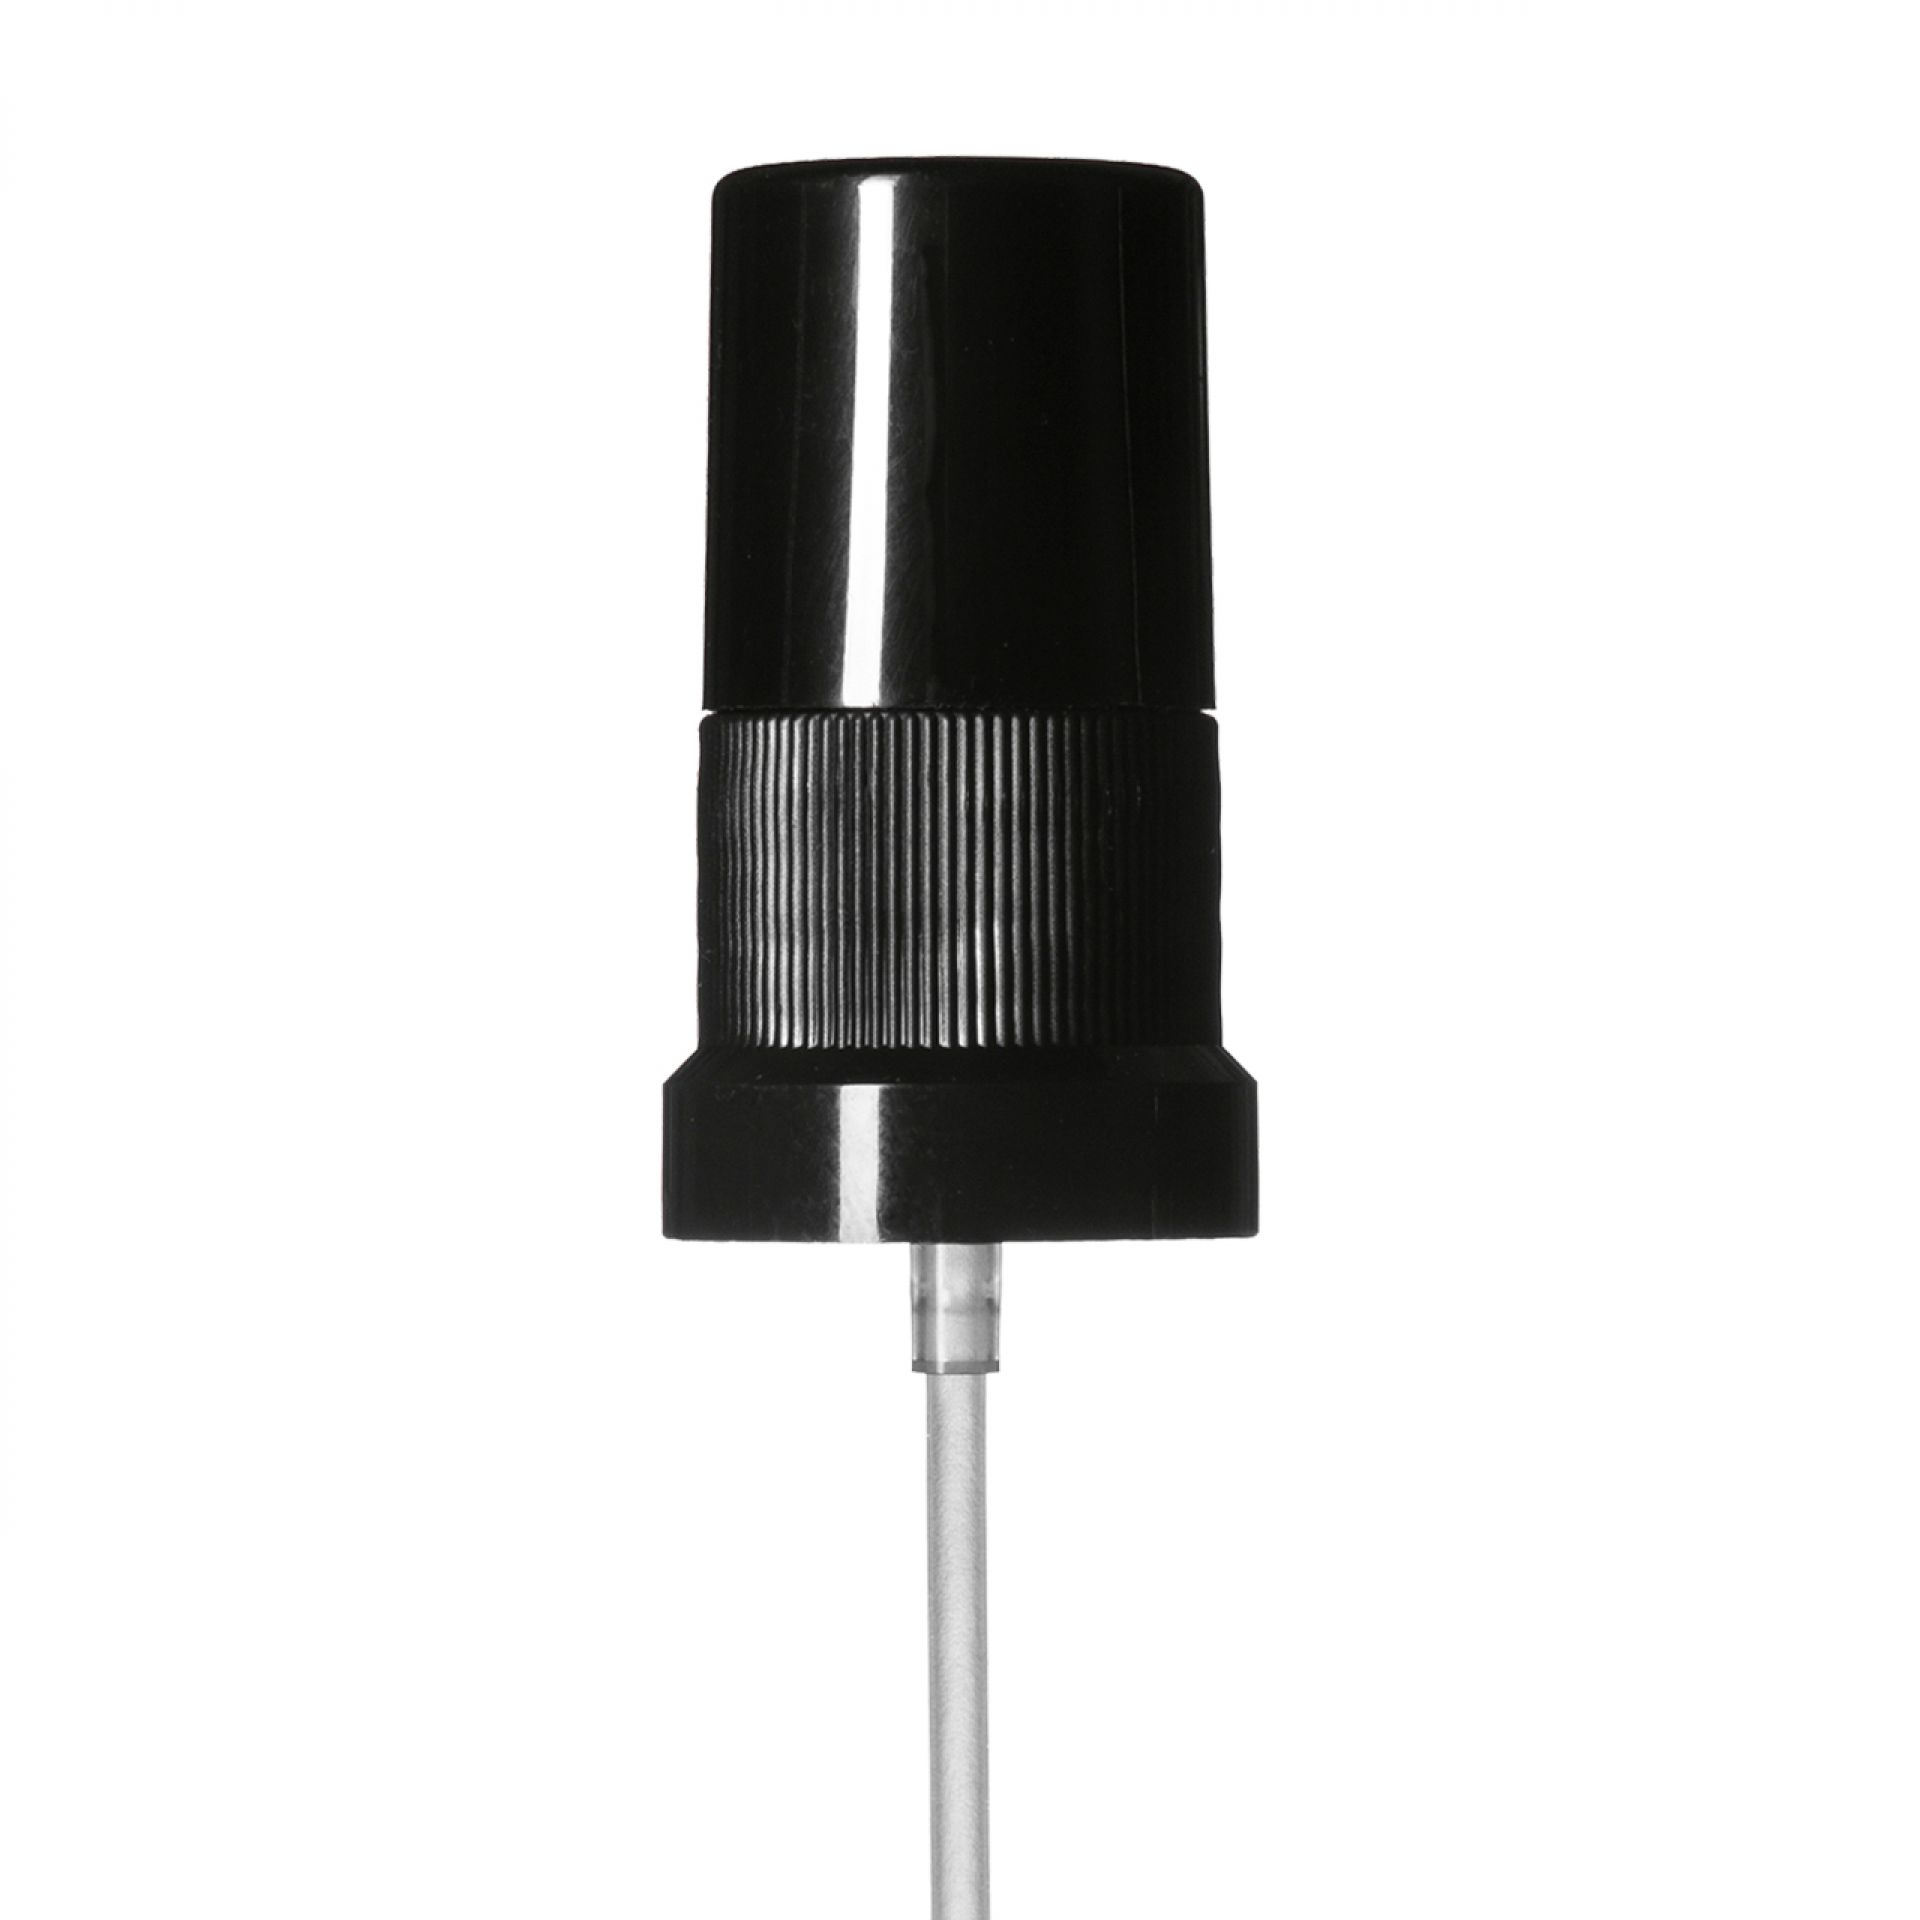 Mist sprayer Classic, DIN18, PP, black, ribbed, dose 0.10 ml, black overcap (Orion 50)